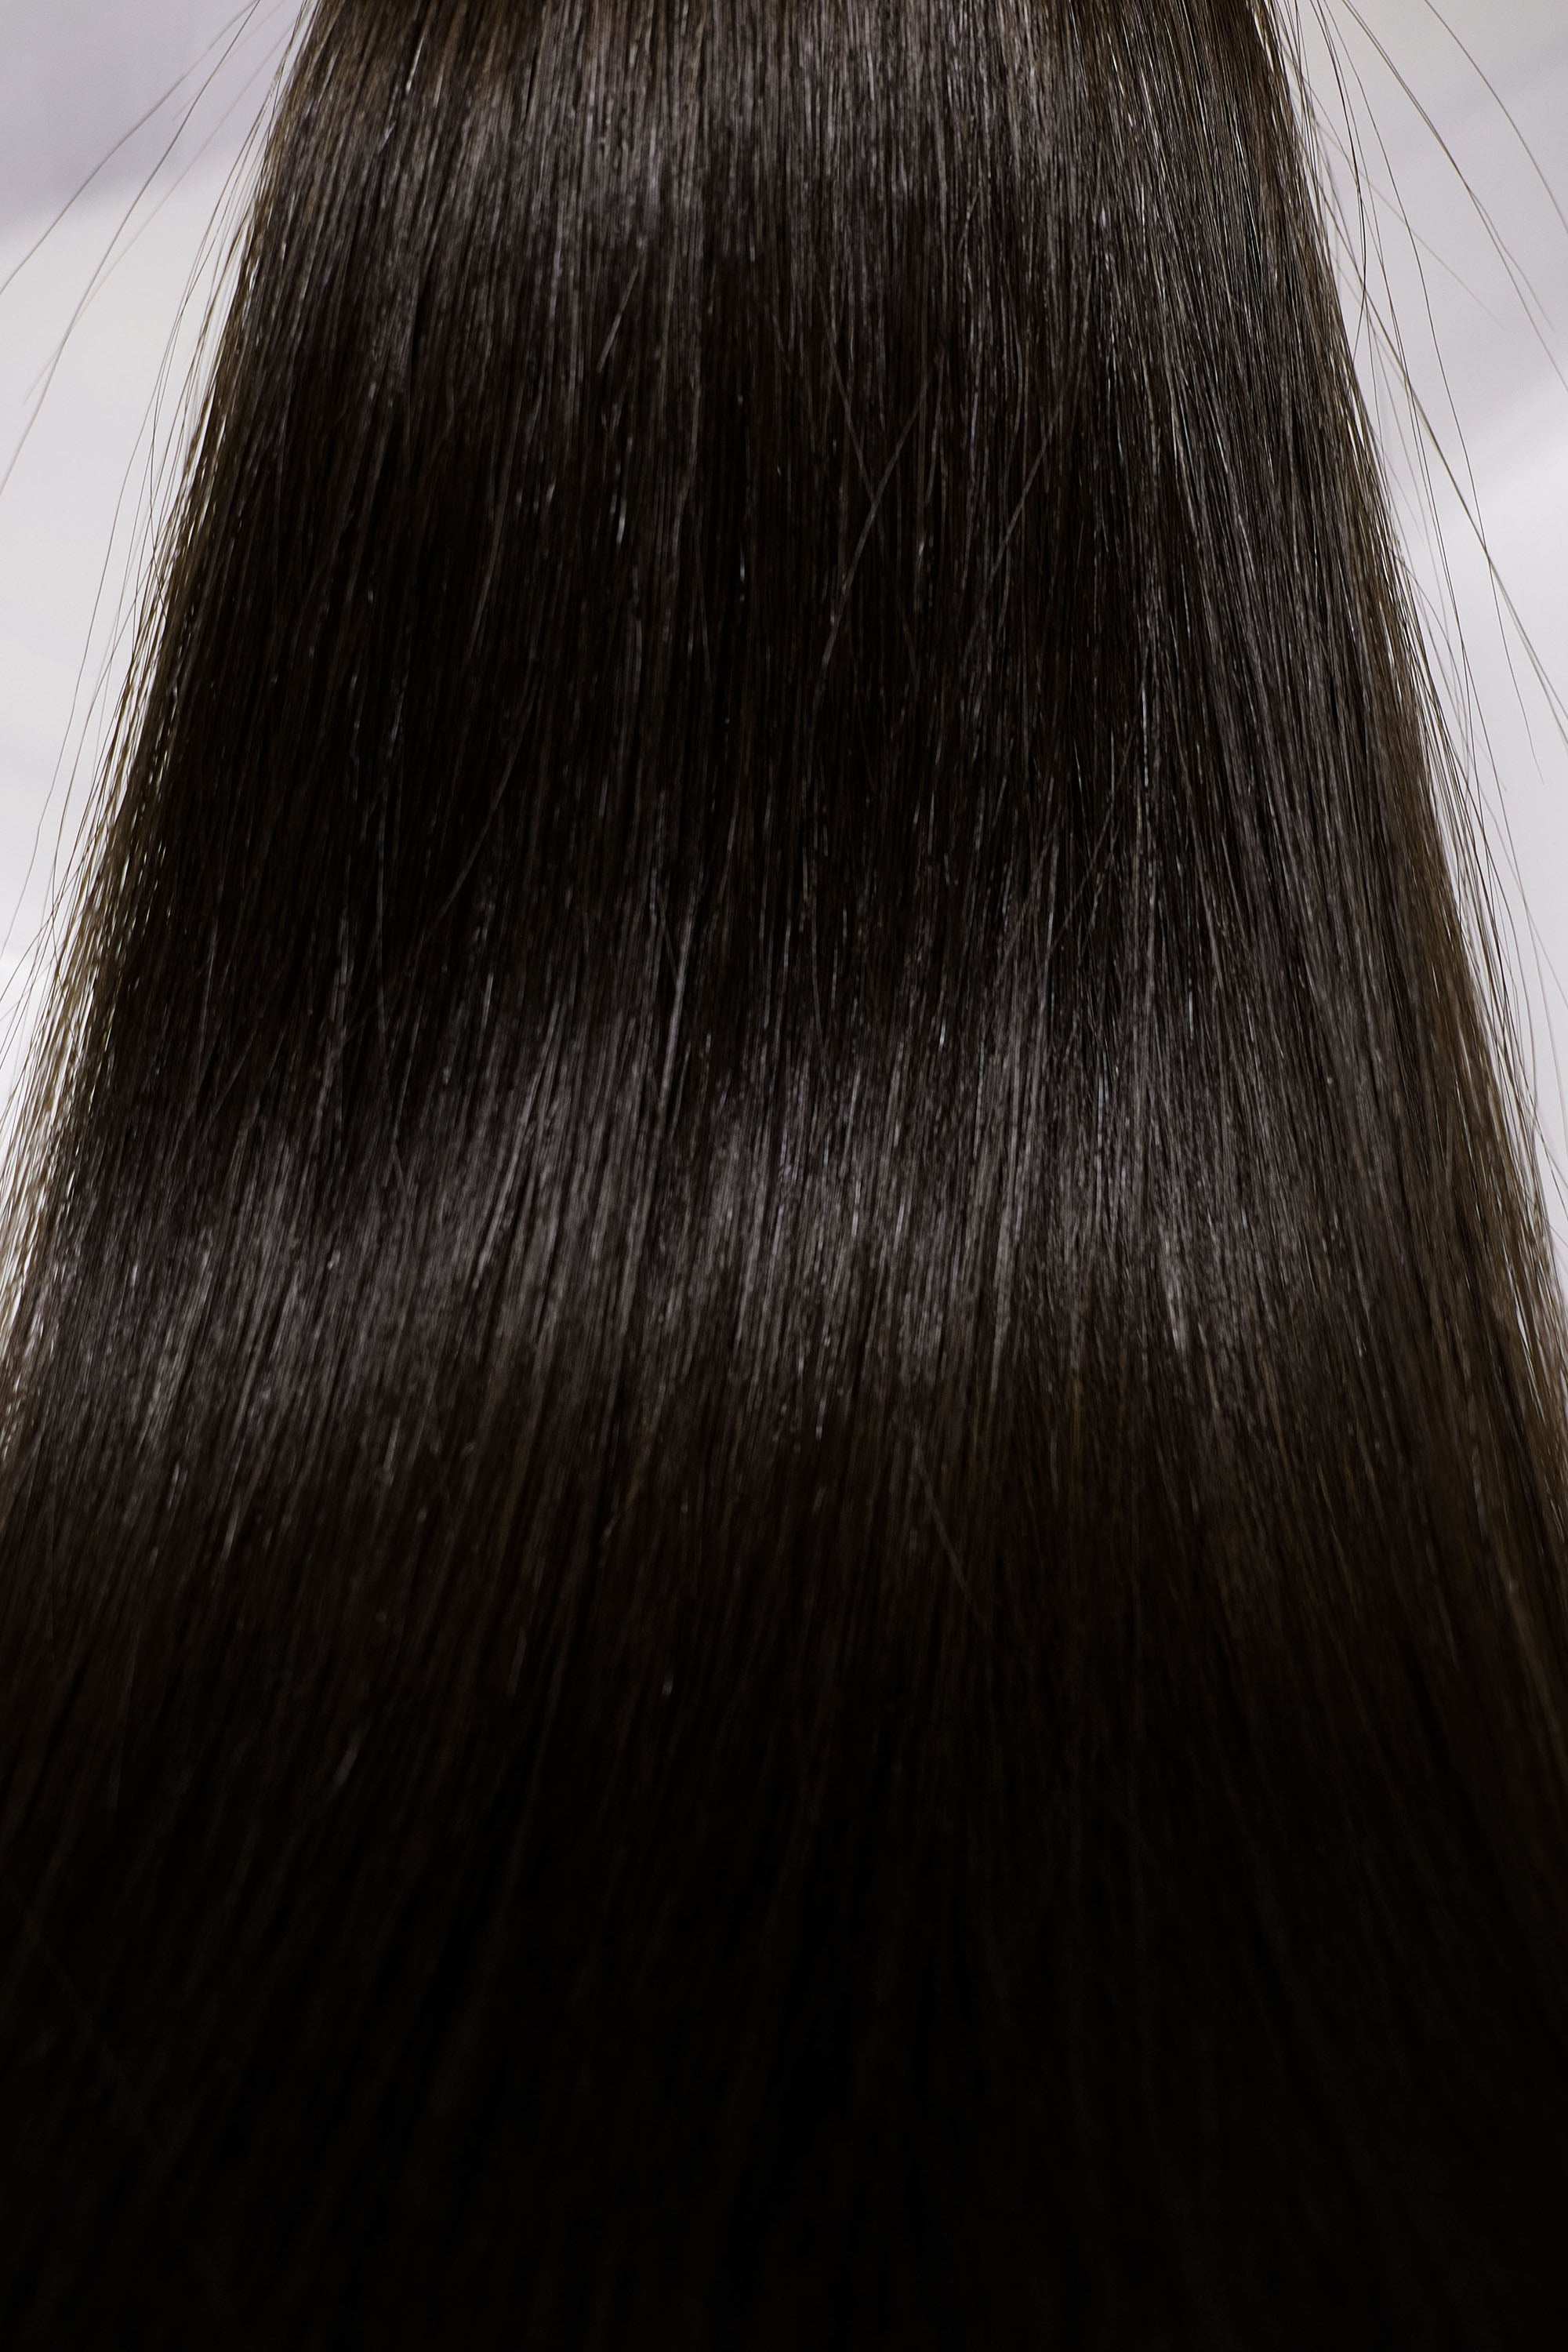 Behair professional Keratin Tip "Premium" 28" (70cm) Natural Straight Natural Black #1B - 25g (1g each pcs) hair extensions